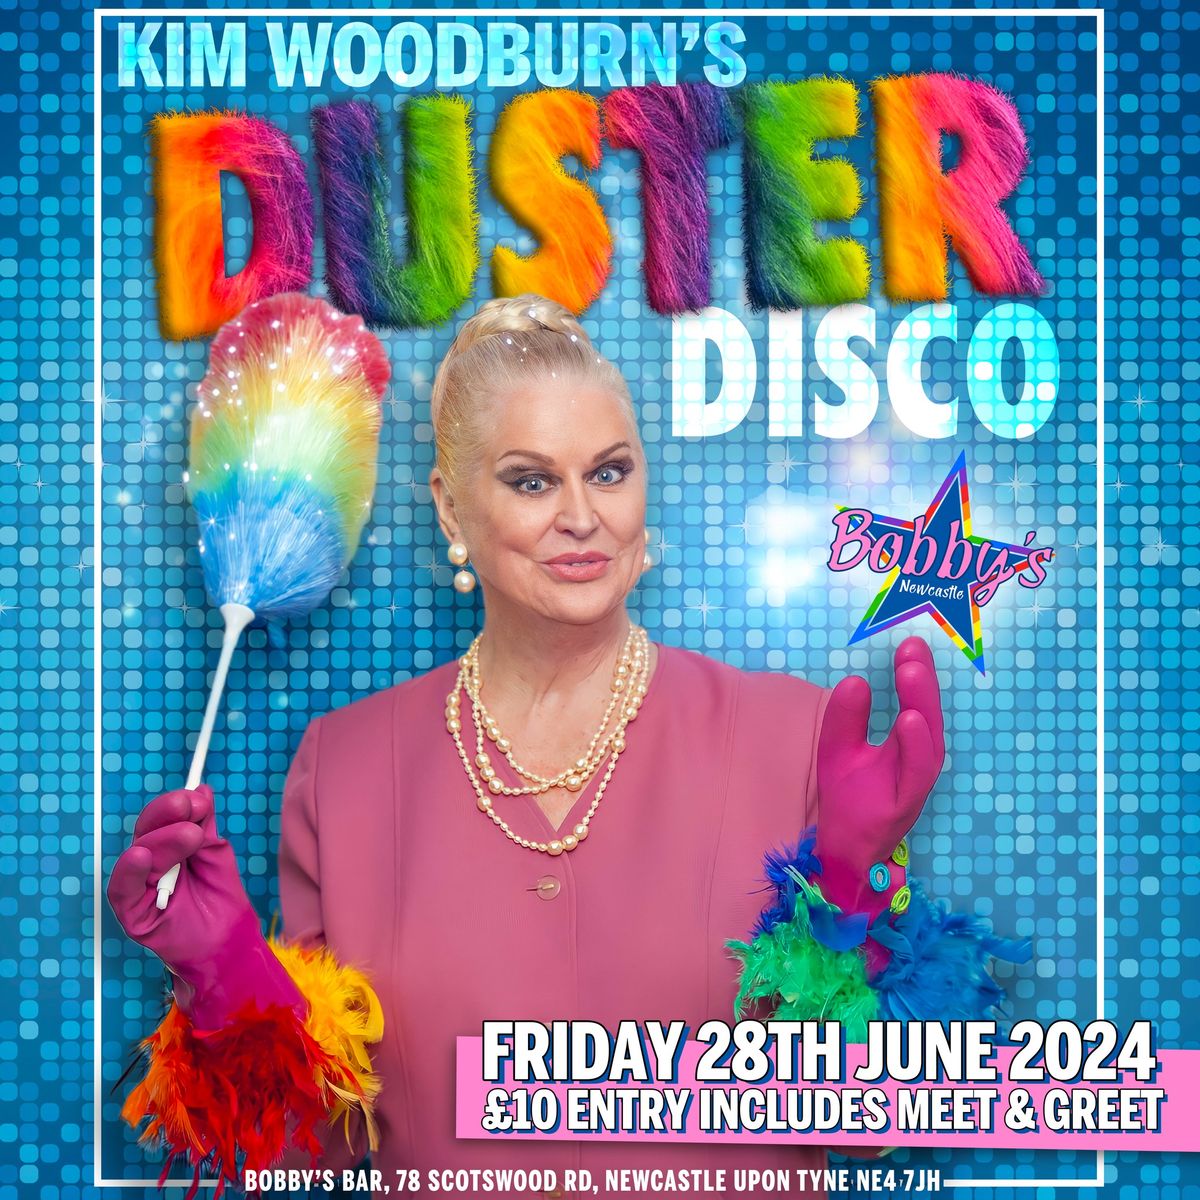 Kim Woodburn's Duster Disco